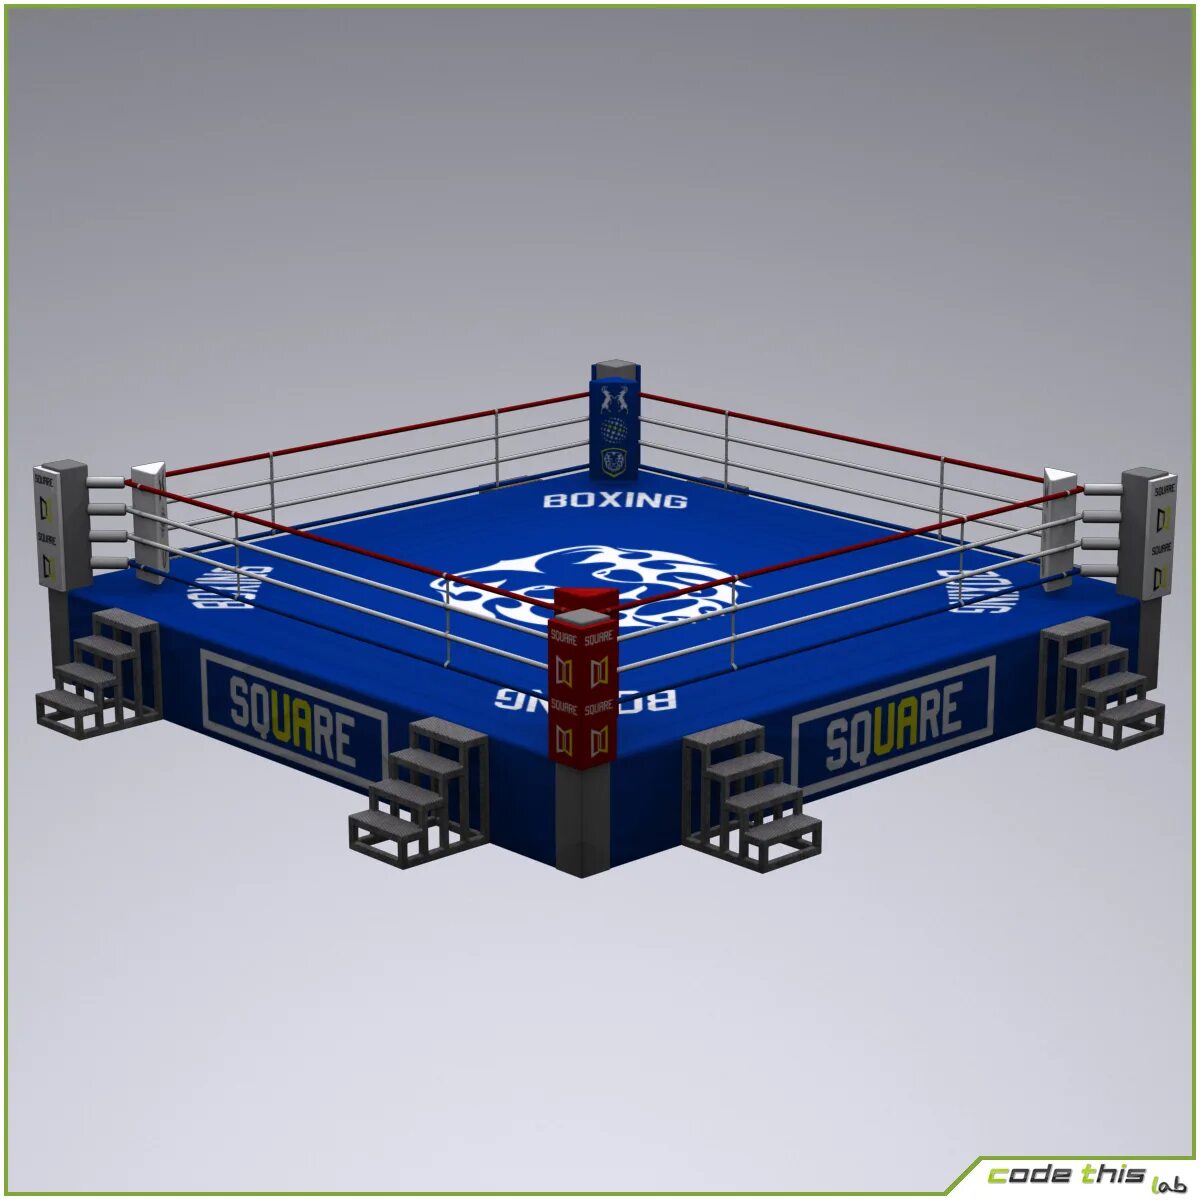 Бокс Octagon. Октагон ринг материал. 3д модель боксерского ринга. SIMS 3 бокс груша ринг. Стадион бокс